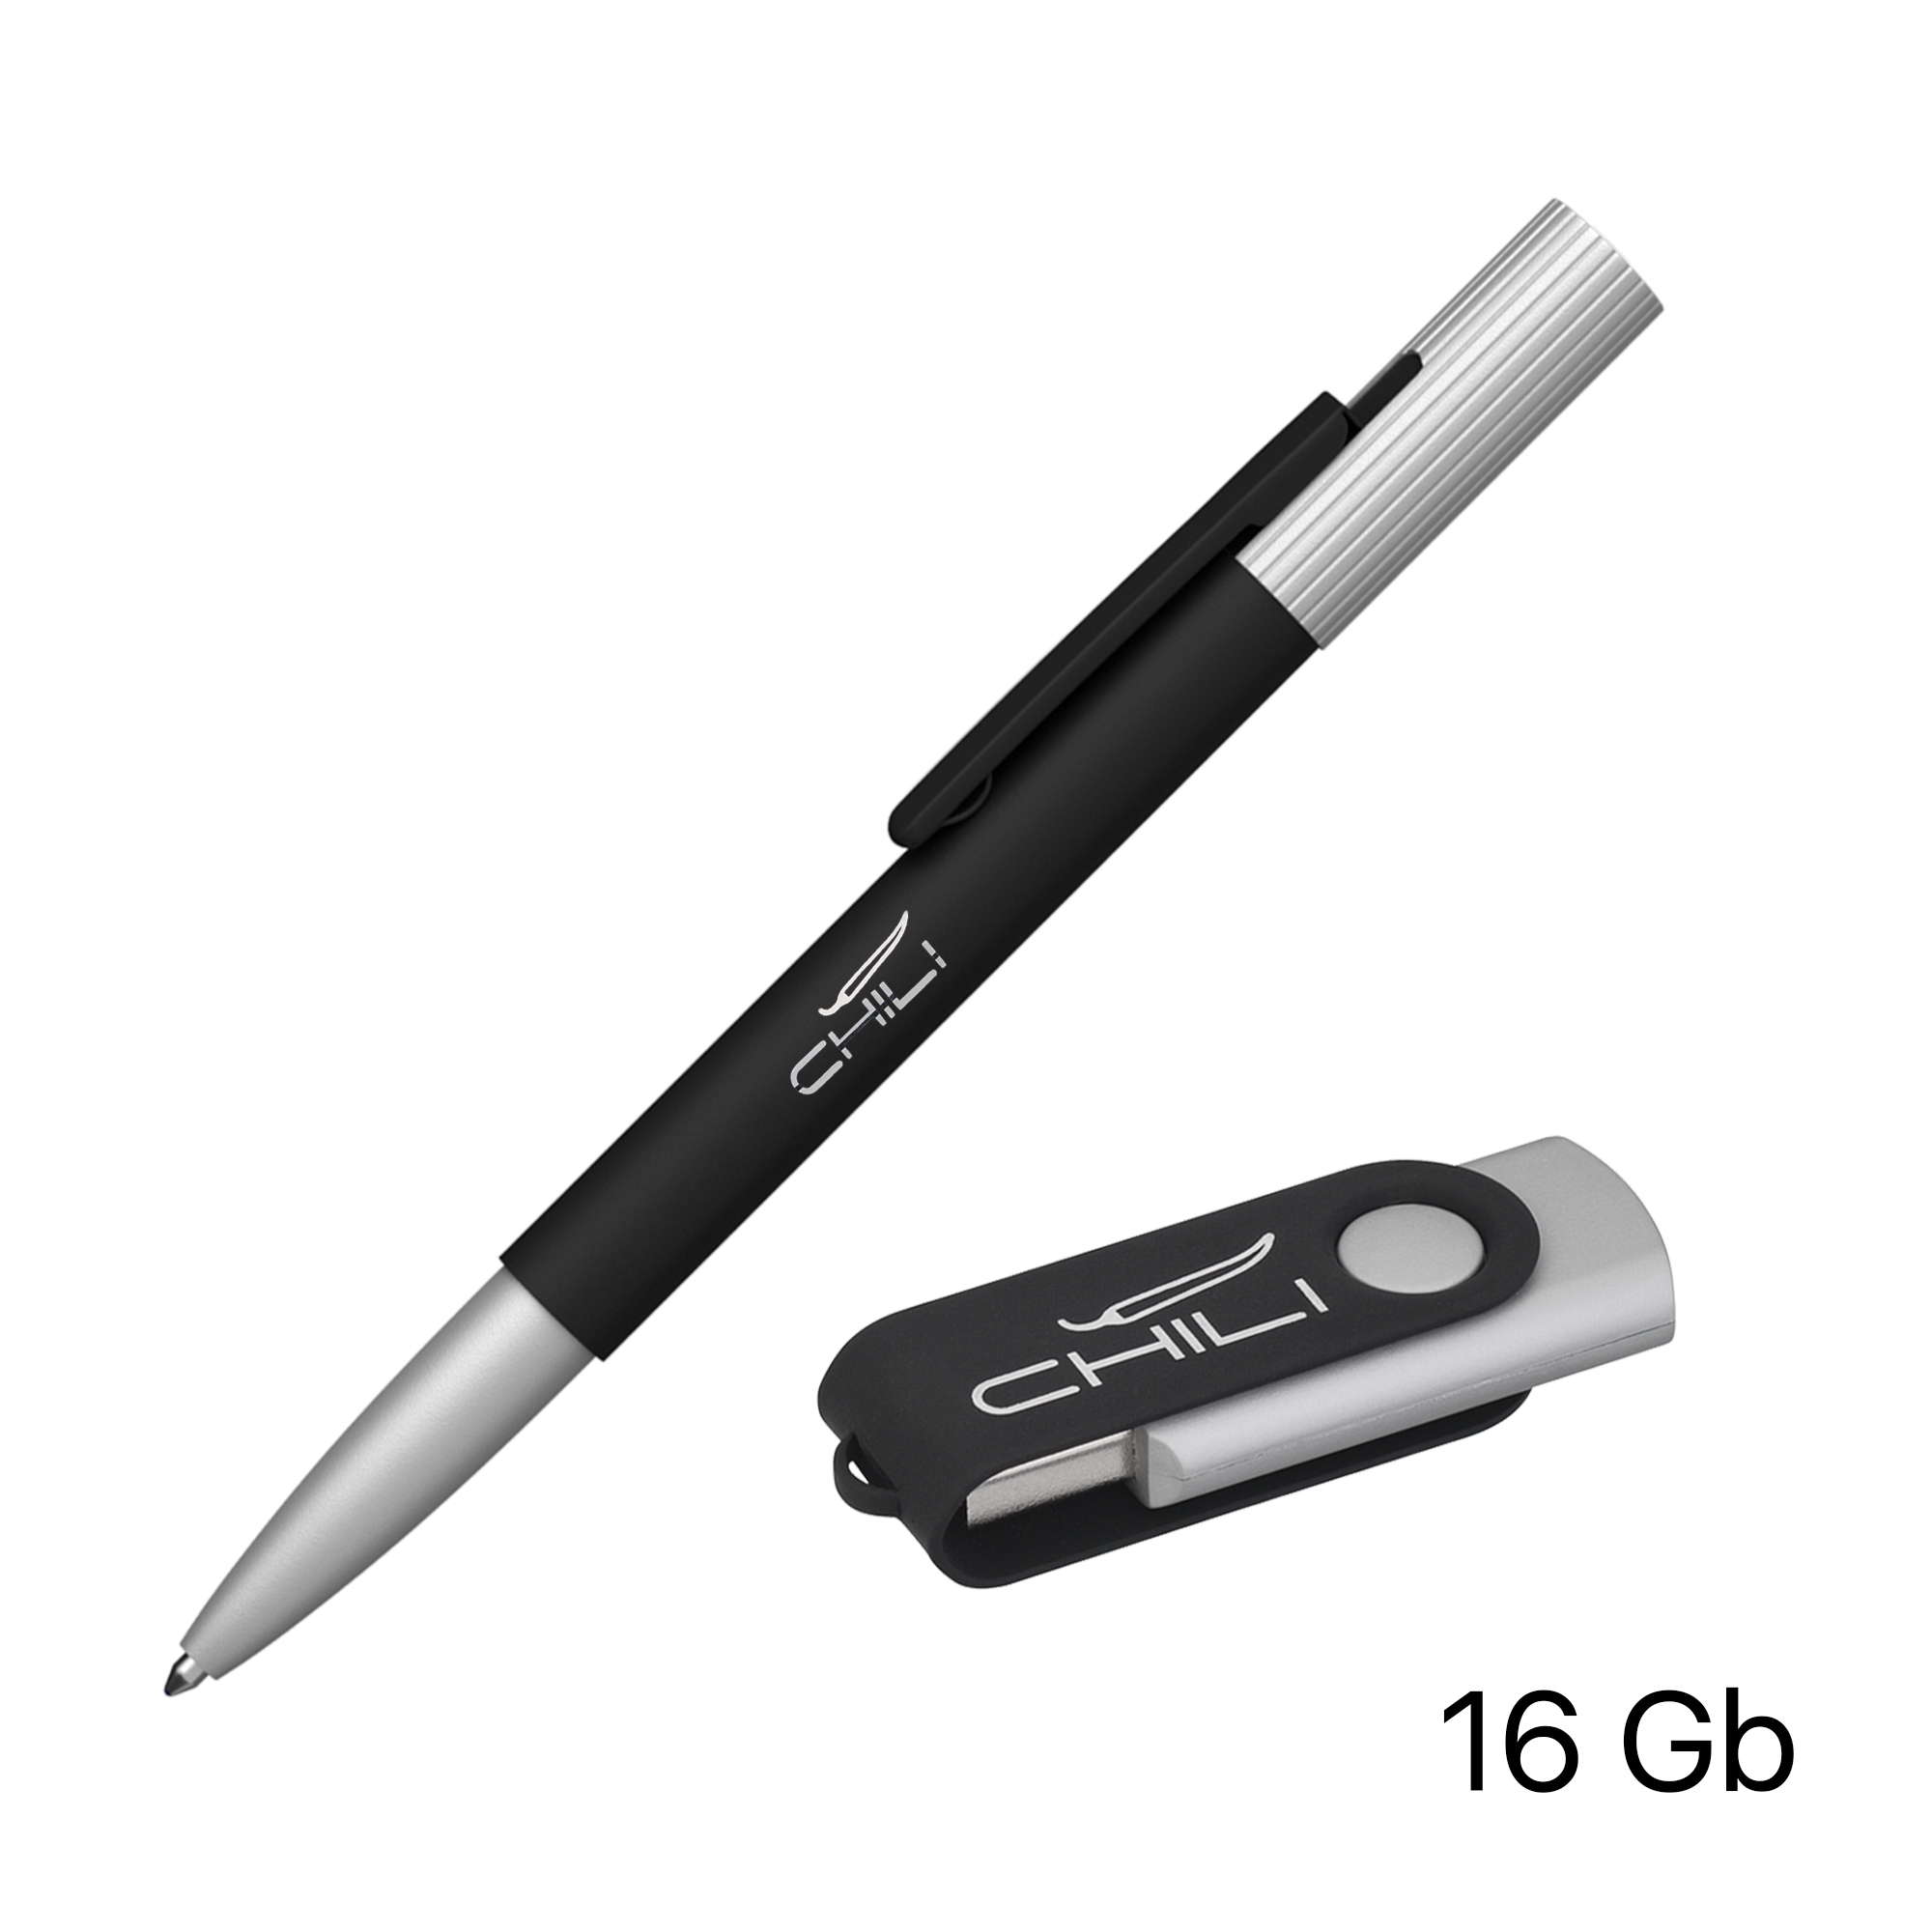 Набор ручка "Clas" + флеш-карта "Vostok" 16 Гб в футляре, покрытие soft touch, черный, металл/пластик/soft touch